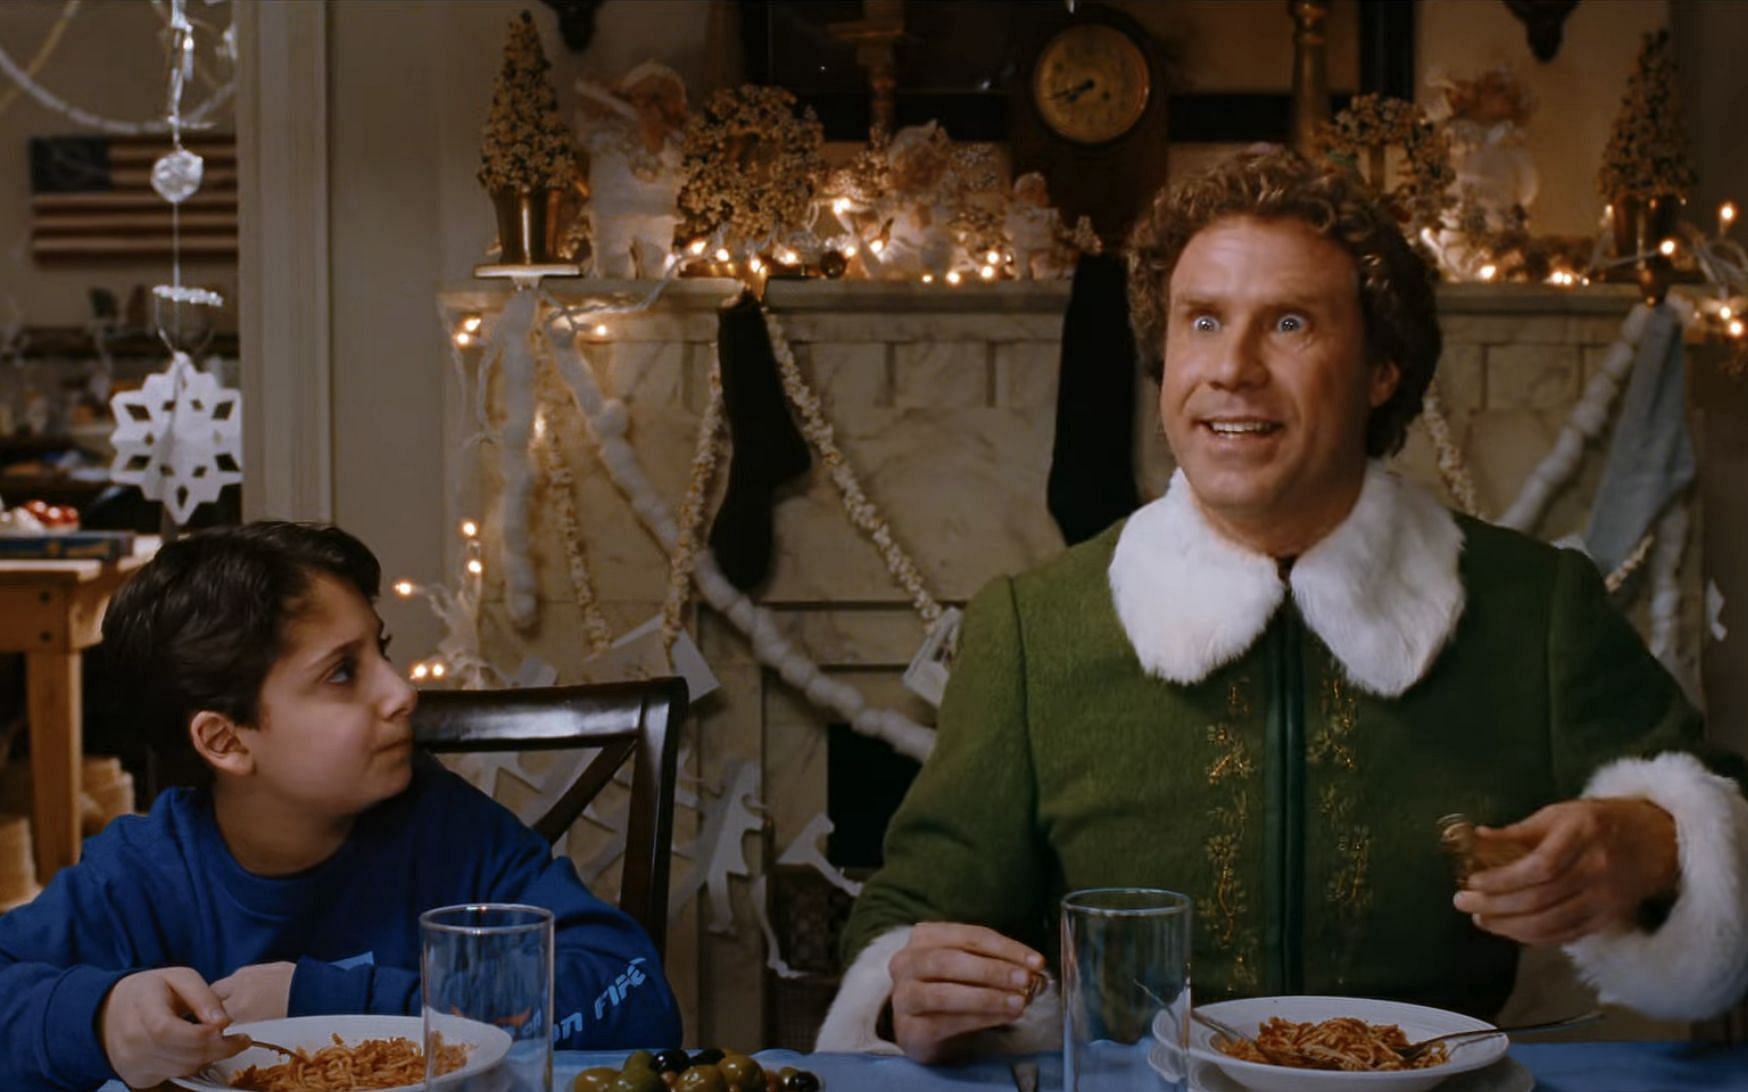 A still from the movie Elf (Image via Warner Bros. Entertainment)